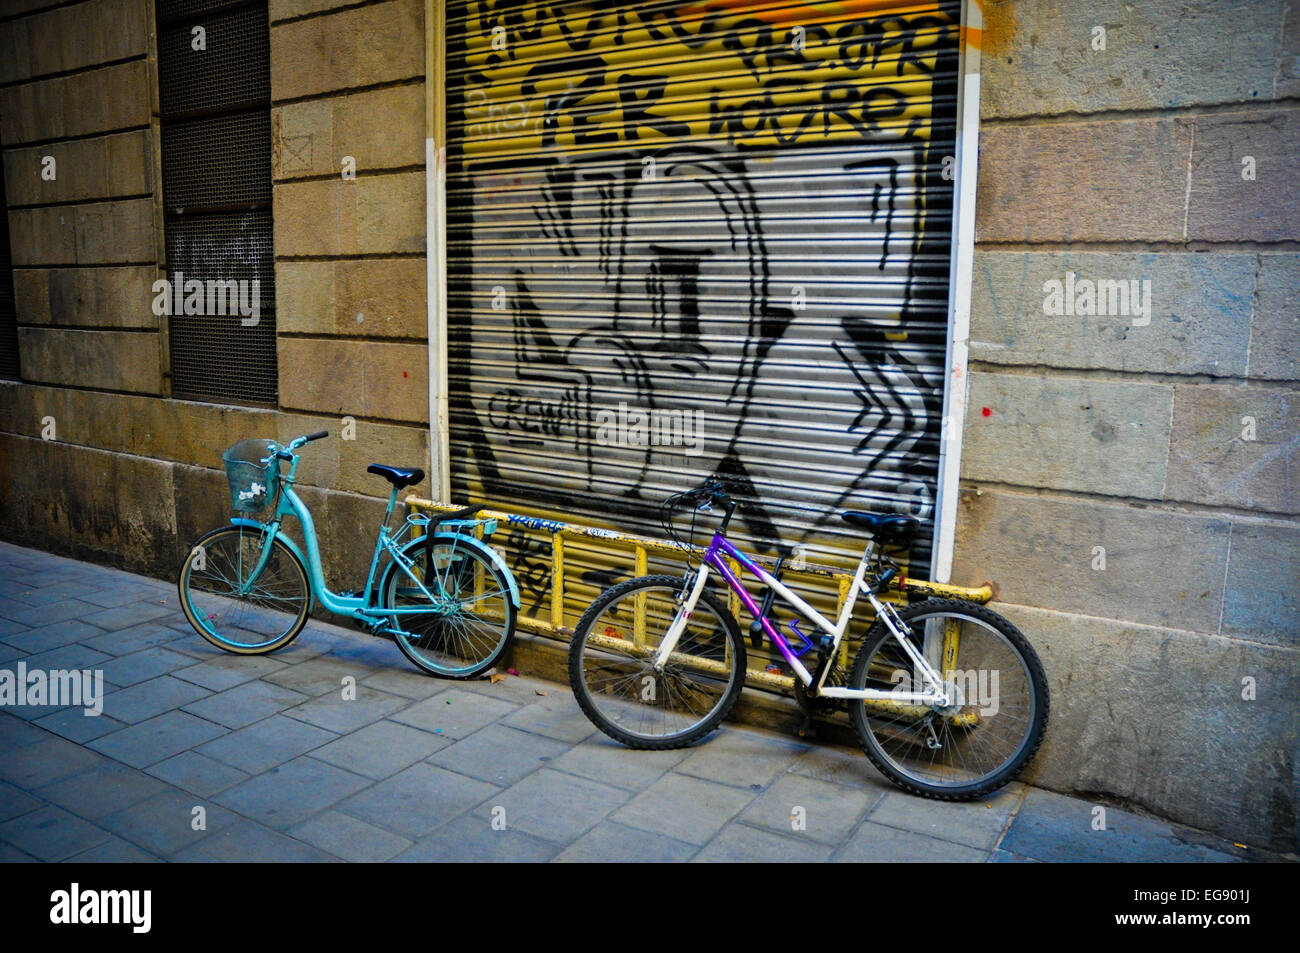 Barcelona Spain bicycles on narrow street with graffiti Stock Photo